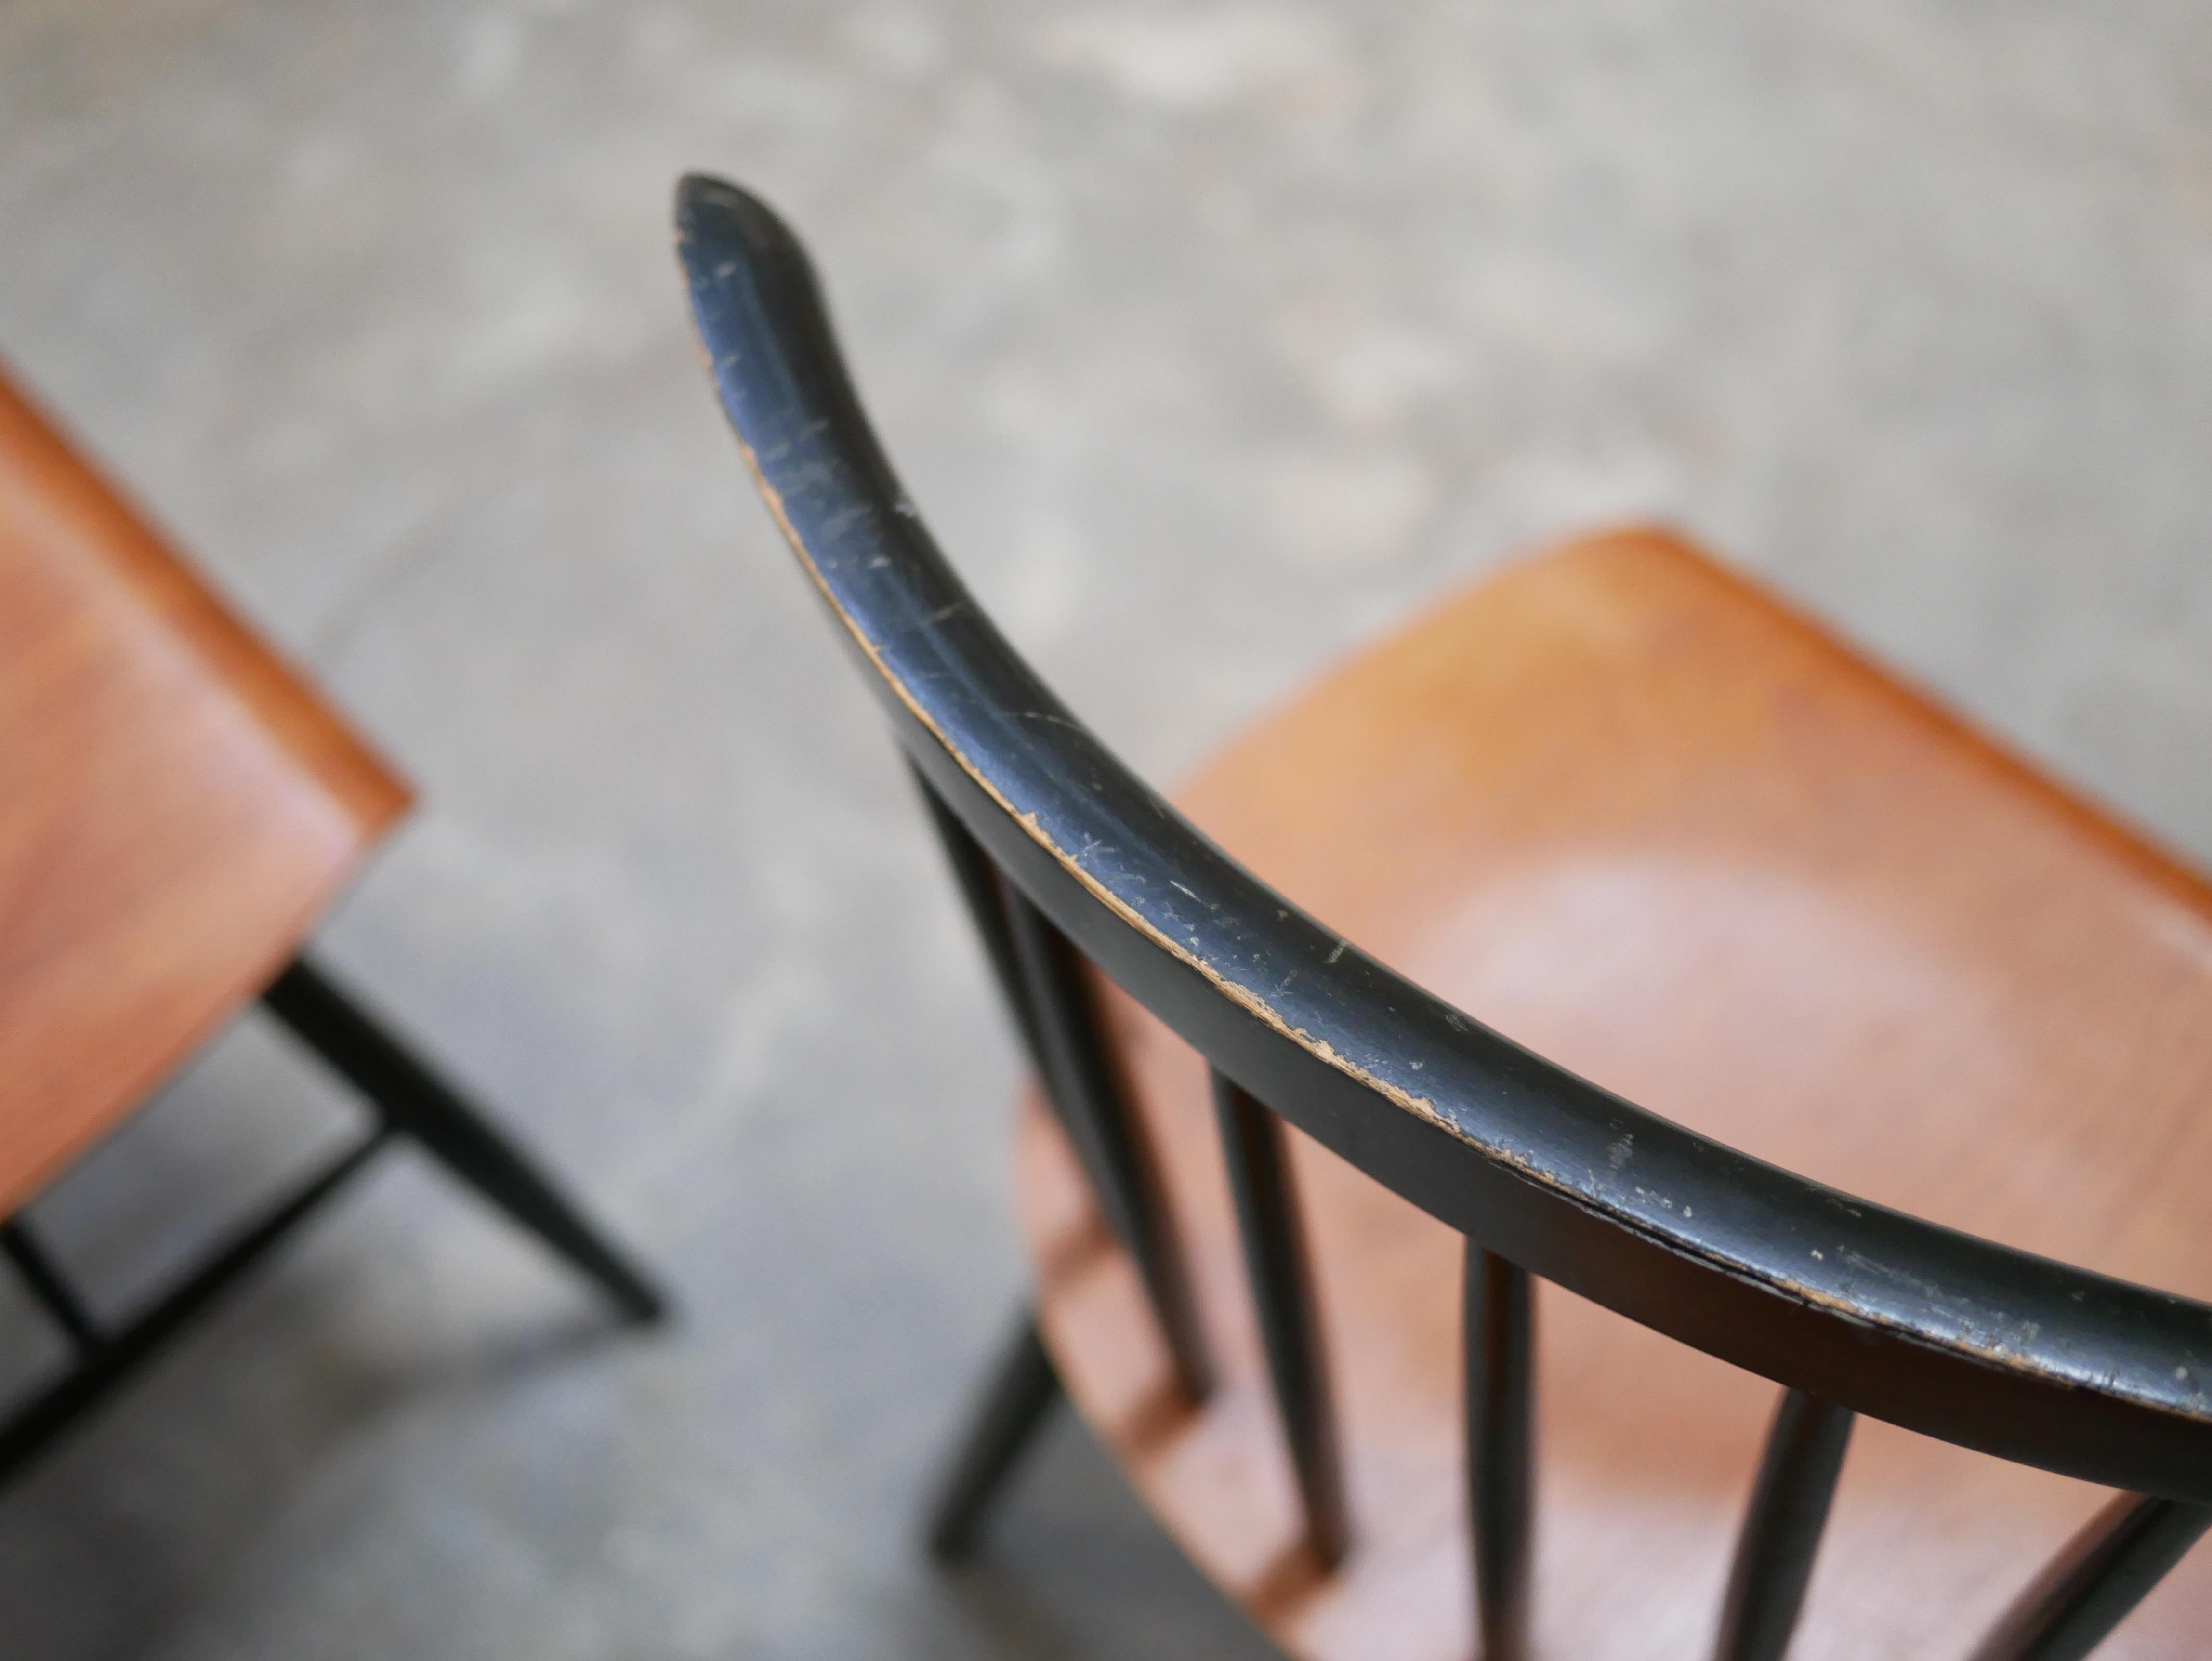 Vintage Scandinavian chair by I.Tapiovaara model Fanett 5